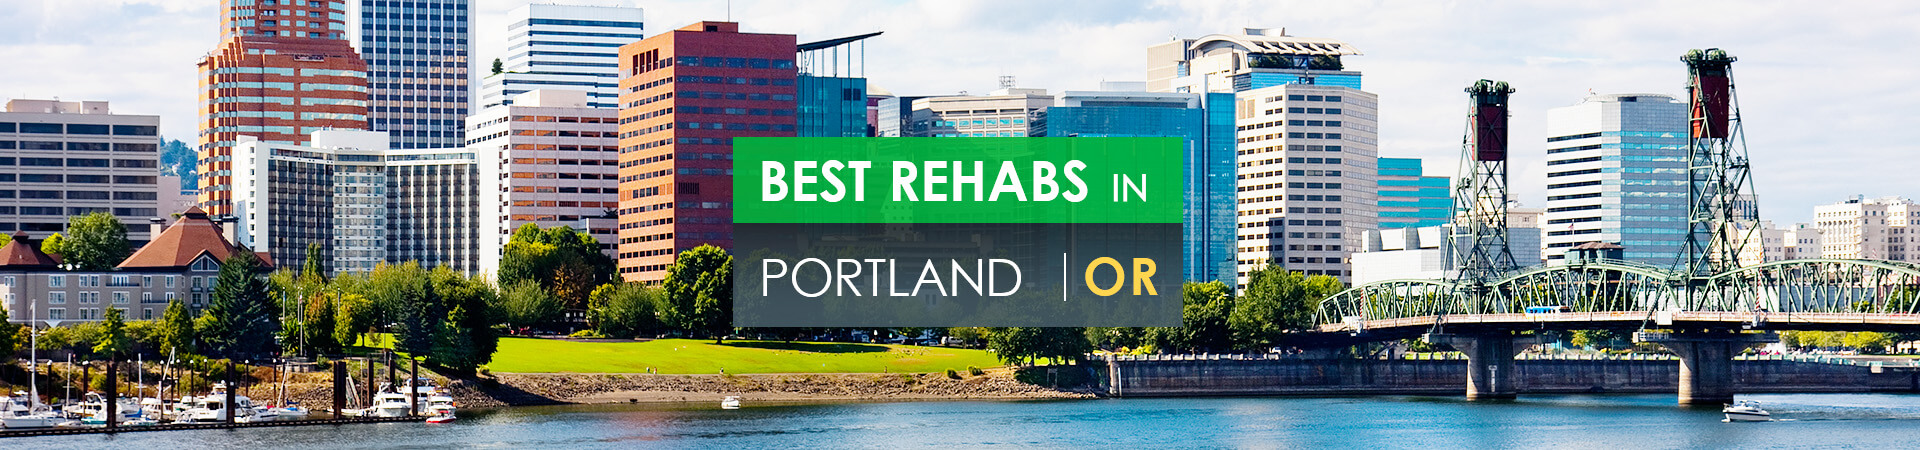 Best rehabs in Portland, OR